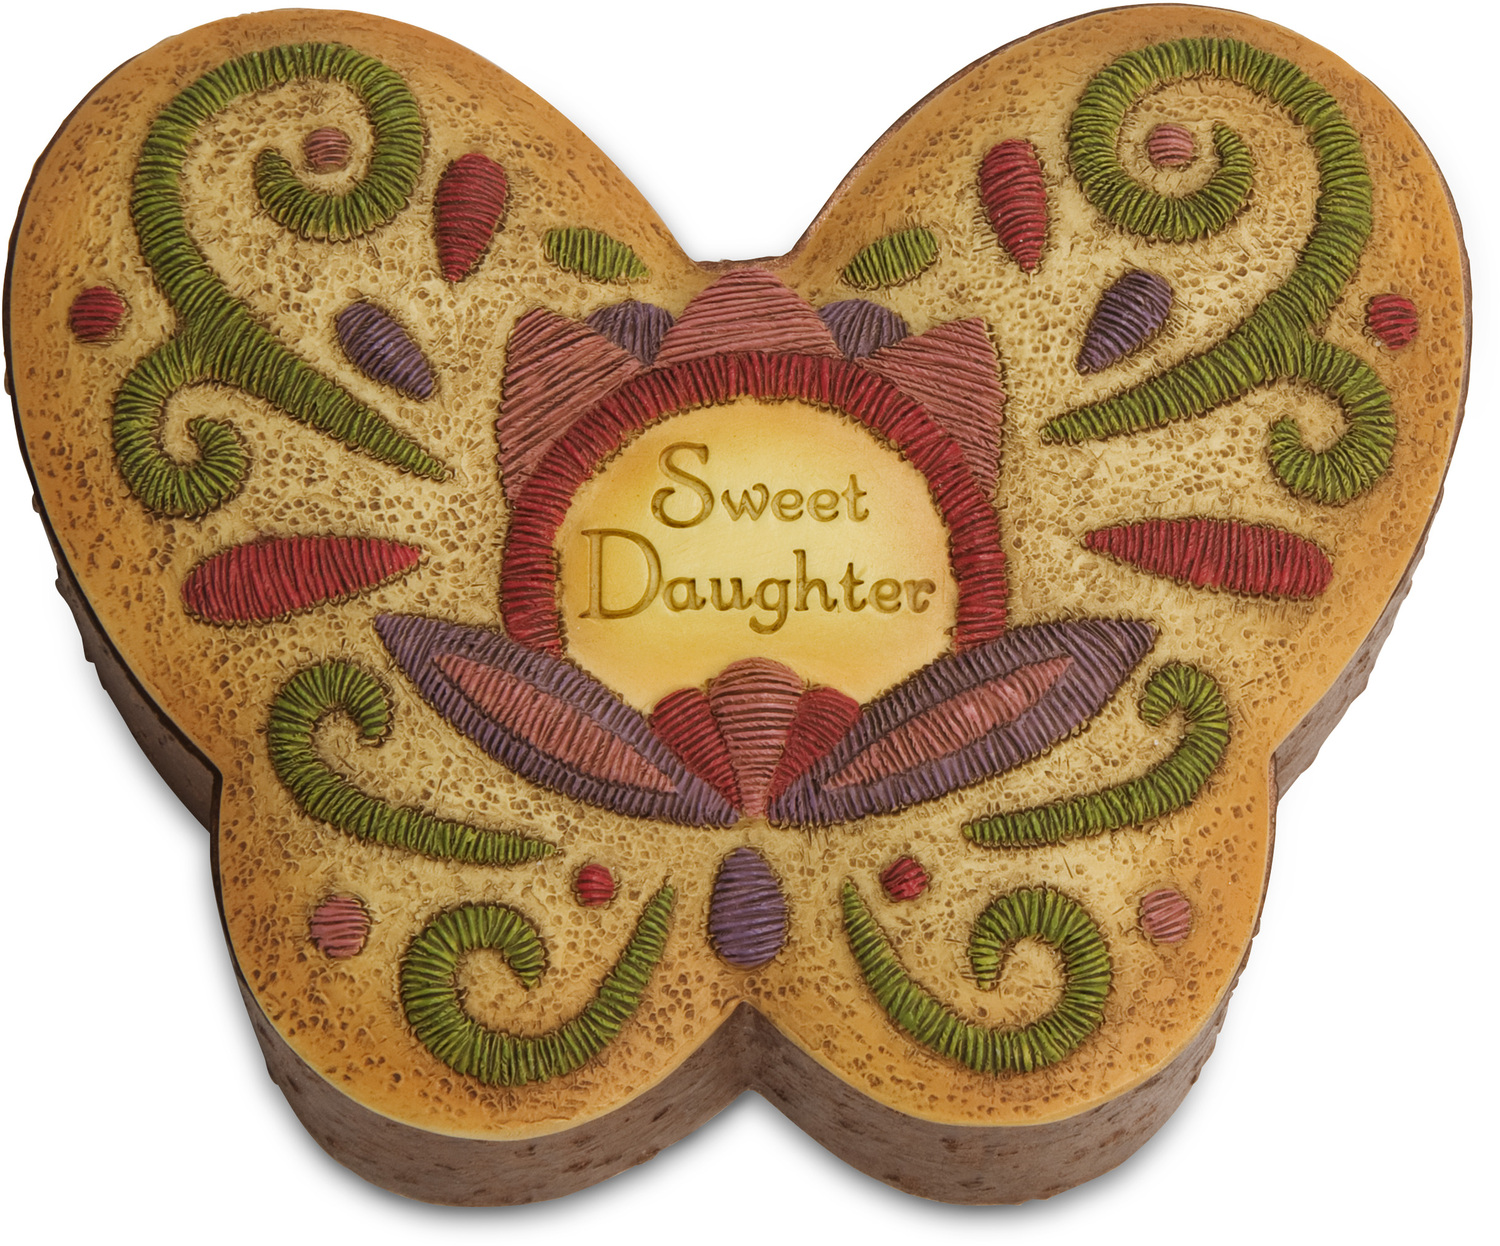 Sweet Daughter by Country Soul - Sweet Daughter - 3" x 2.75" Keepsake Box